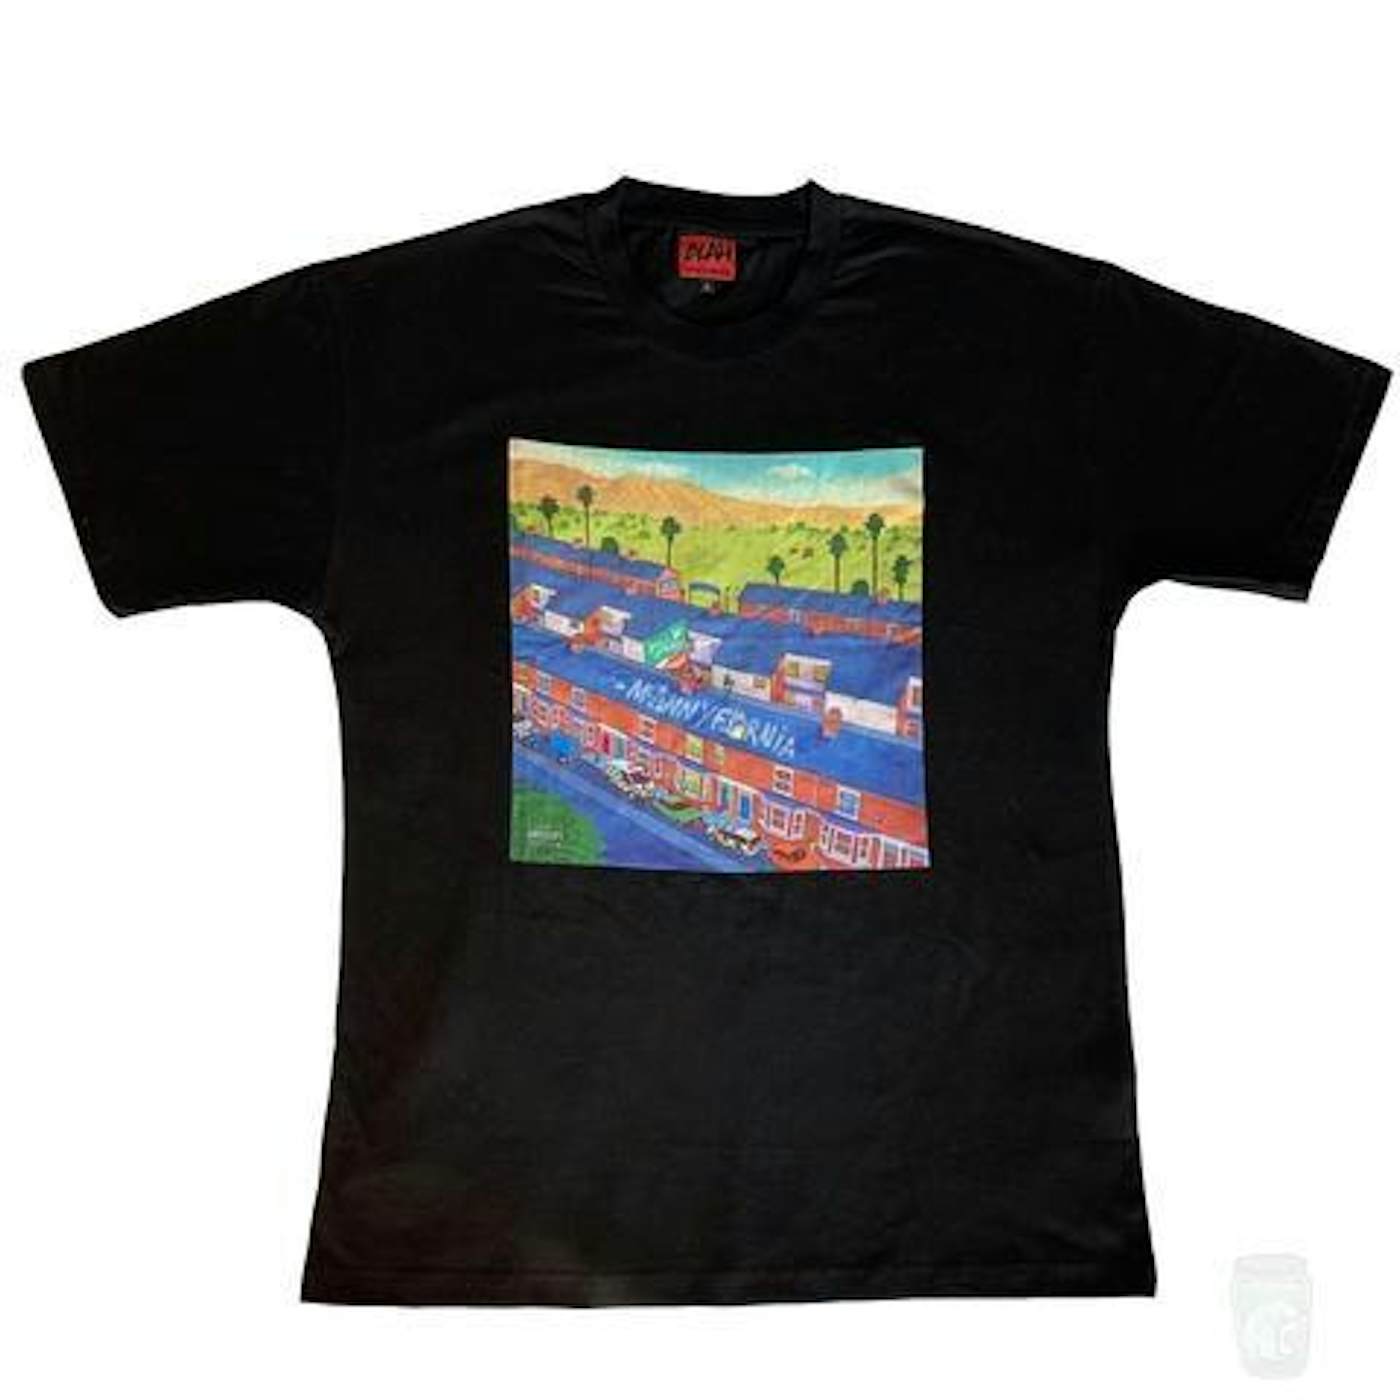 Black Josh MANNYFORNIA T-Shirt